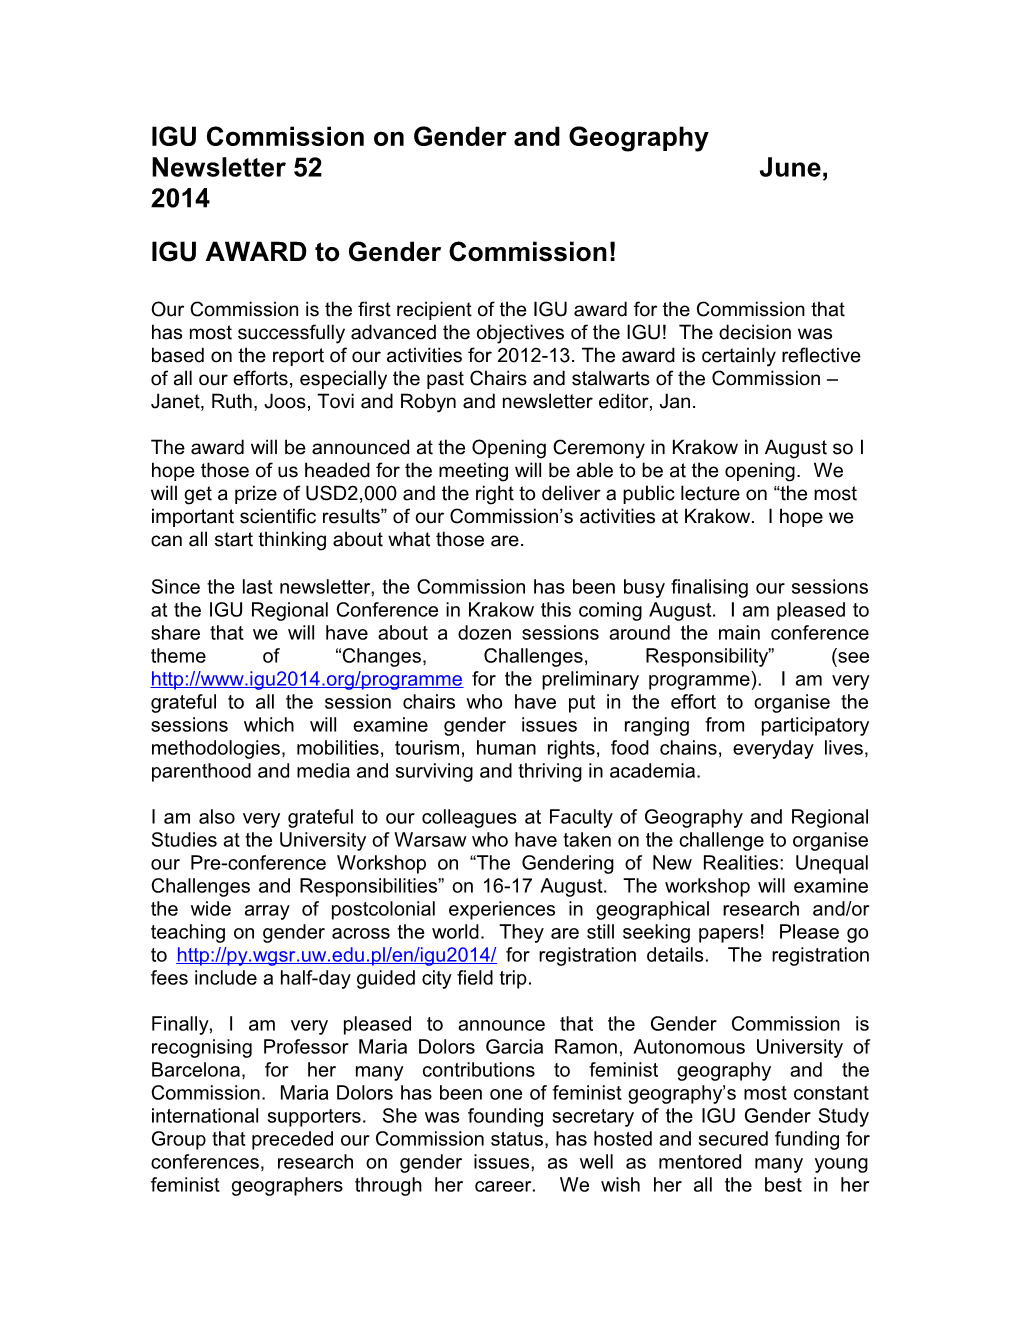 IGU Gender Newsletter 52